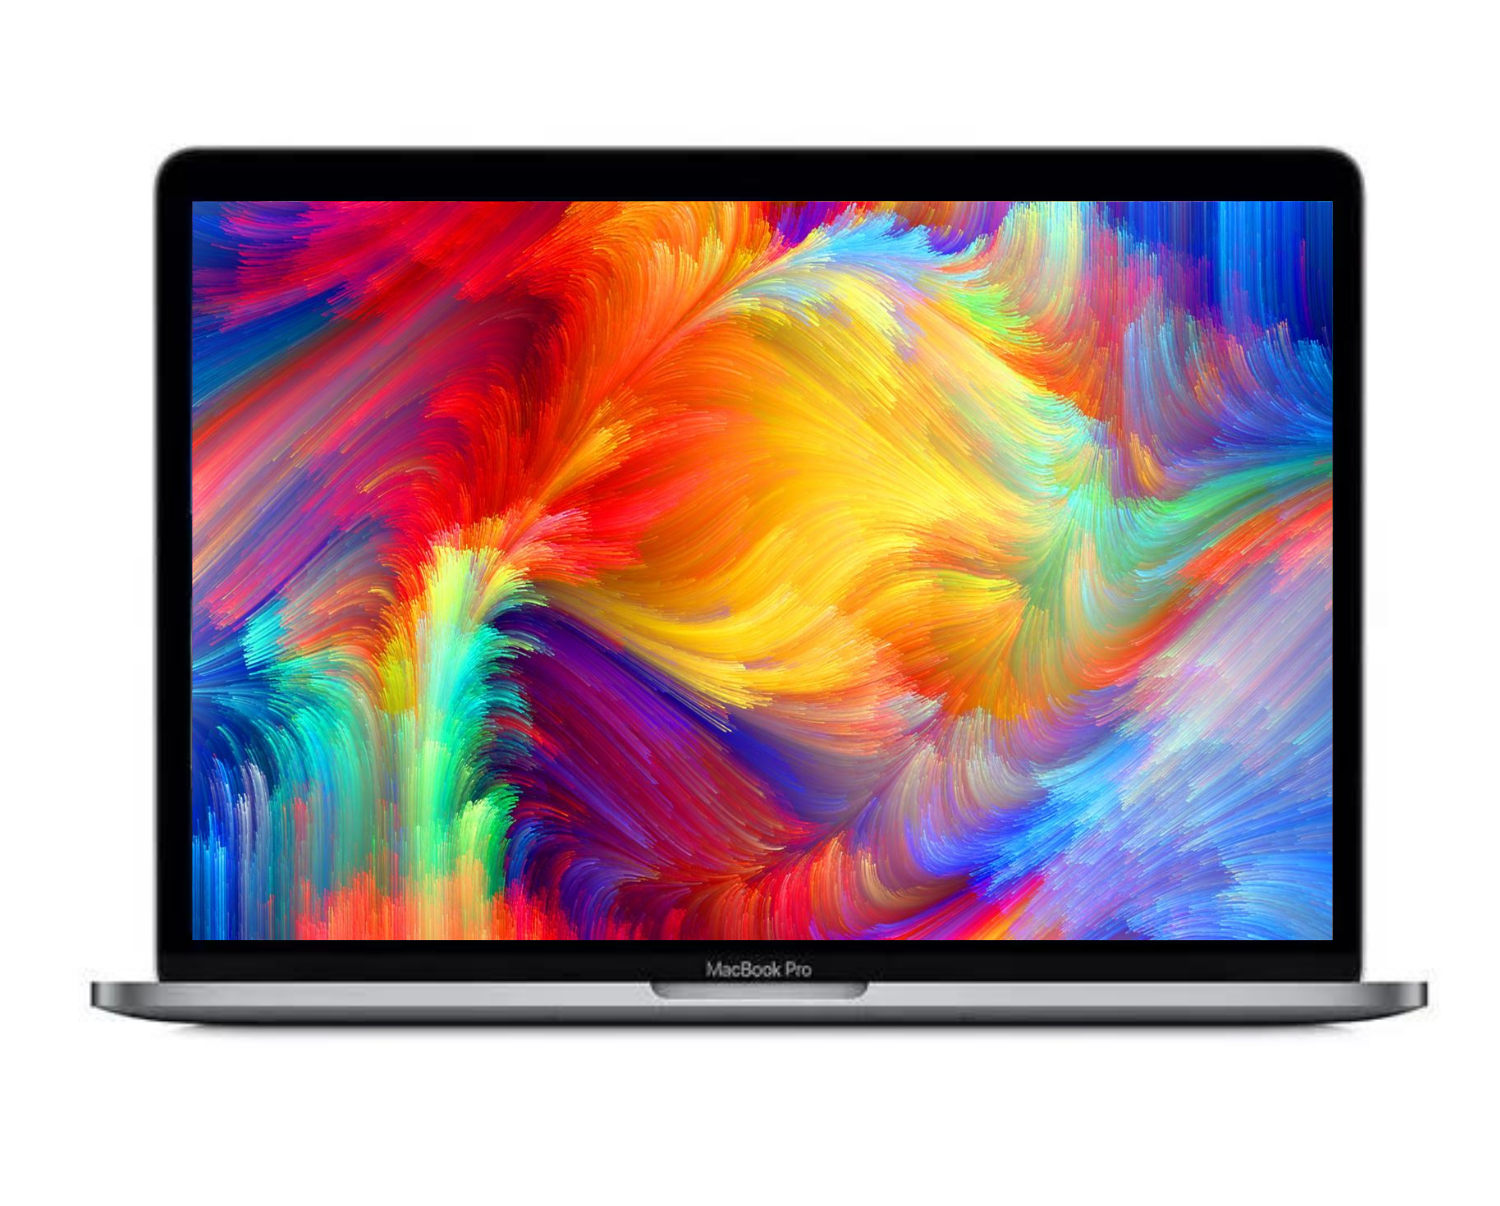 MacBook Pro 13inch i5 16GB 128GB 2017